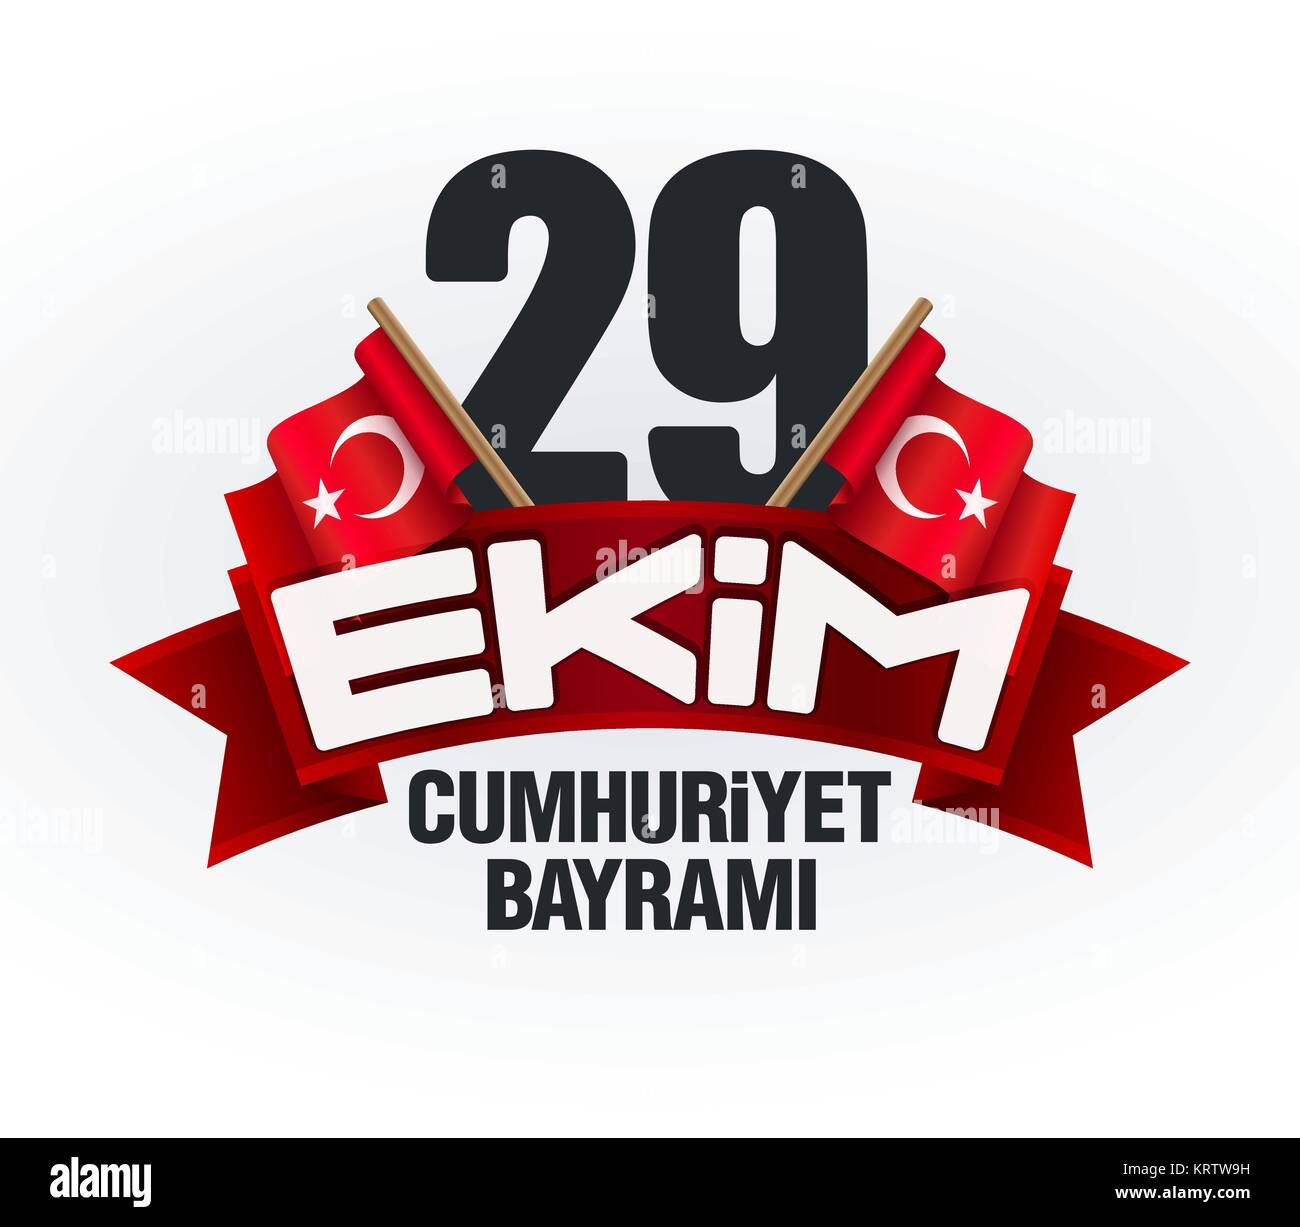 29 Ekim Cumhuriyet Bayrami Tebrik Karti - October 29 Republic Day of Turkey. Greeting card concept on white background. Stock Vector